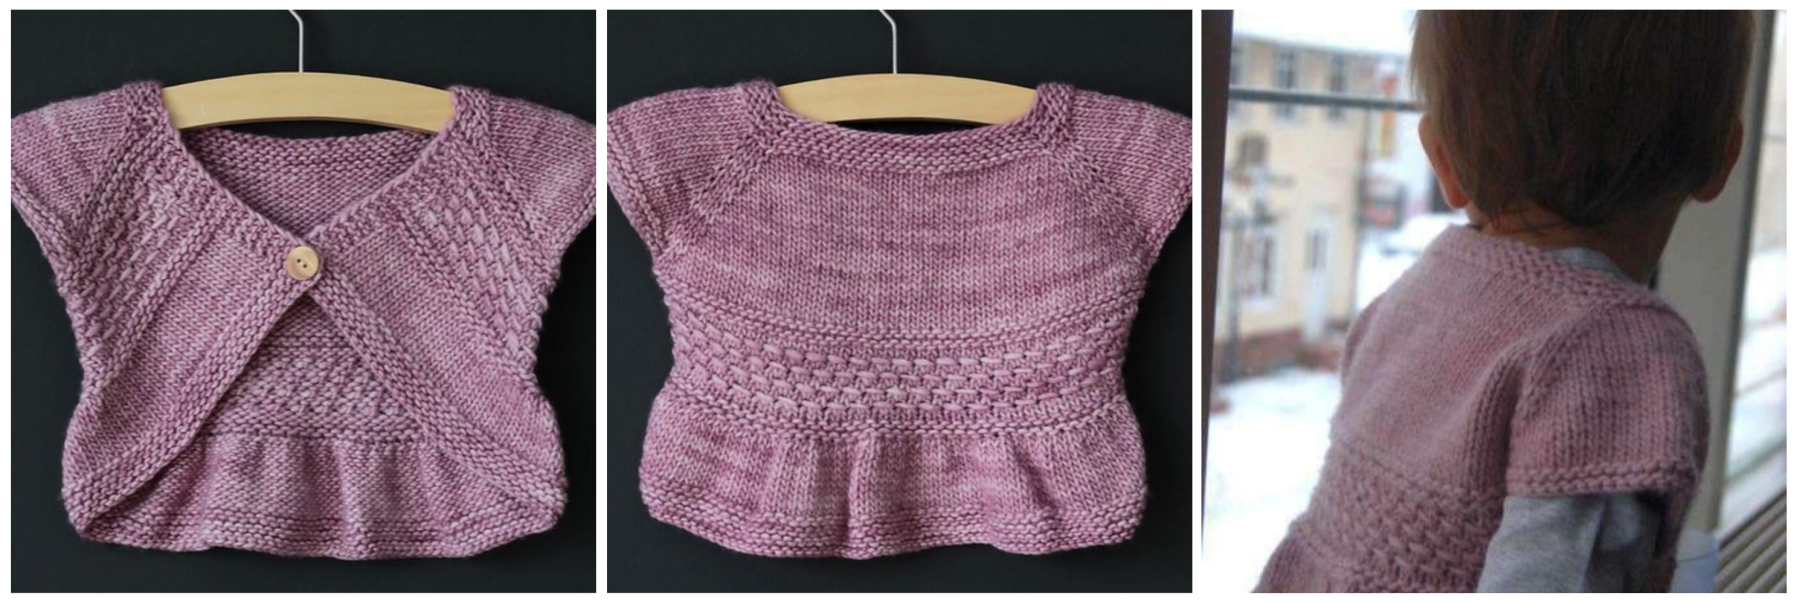 Knitting the Entrechat Baby Sweater (Shrug)